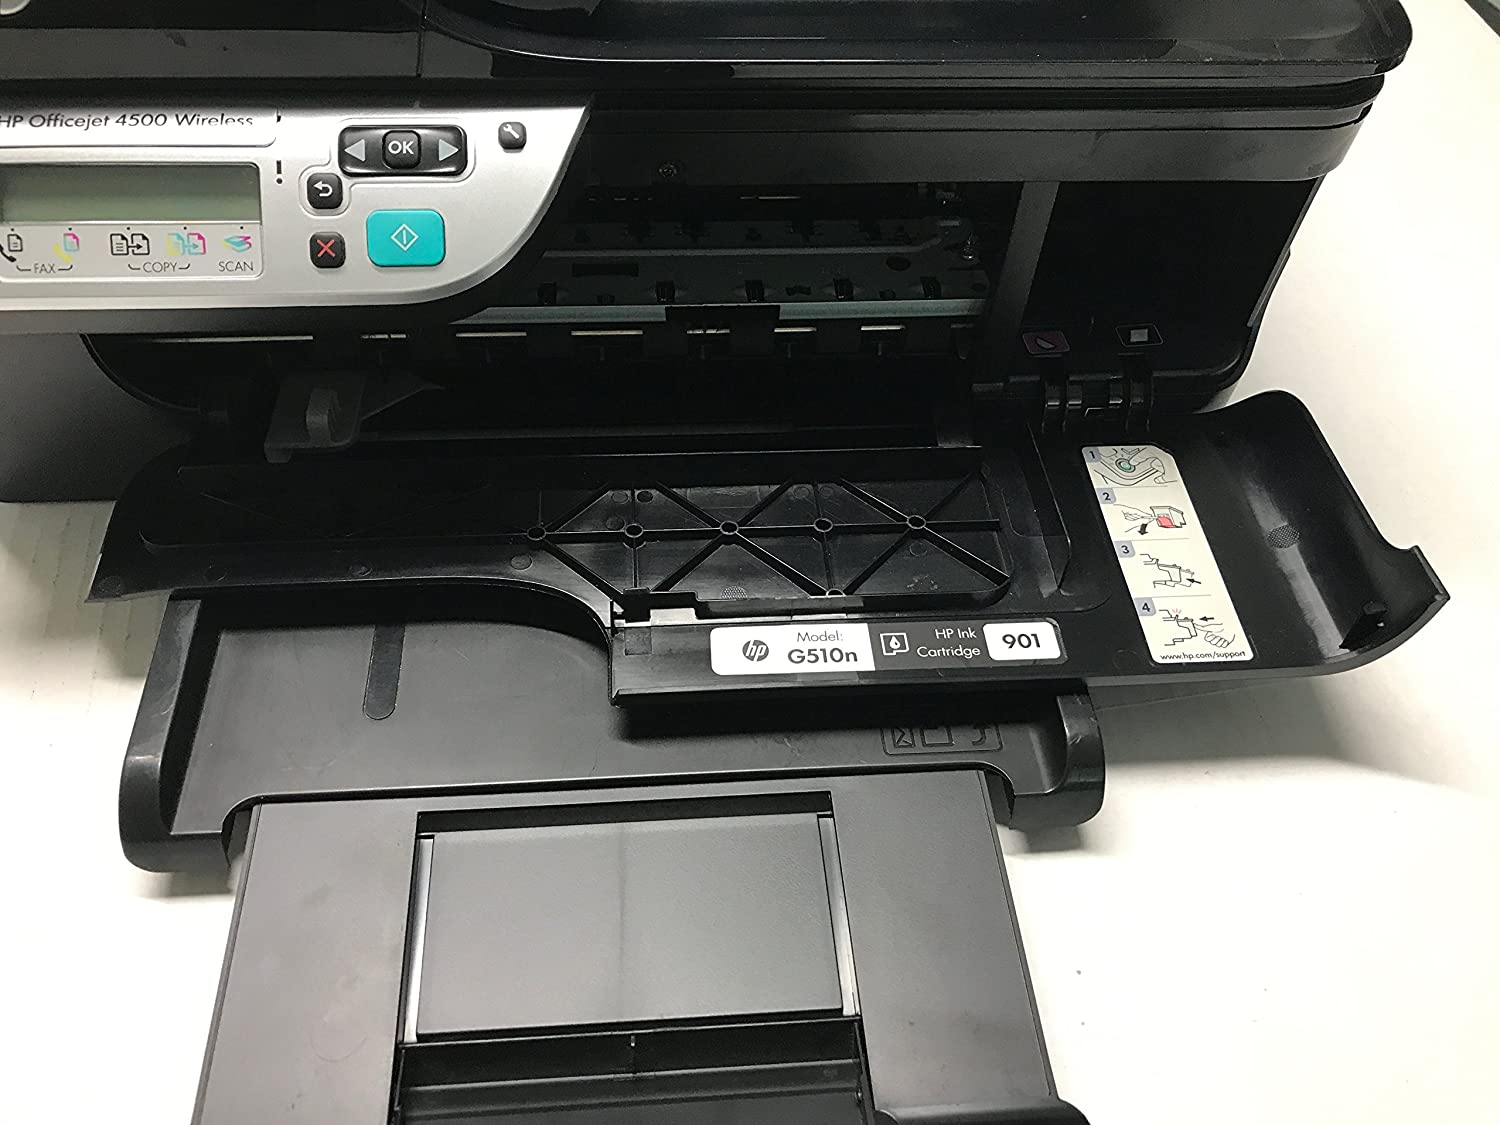 hp officejet 4500 g510n printer driver download for mac